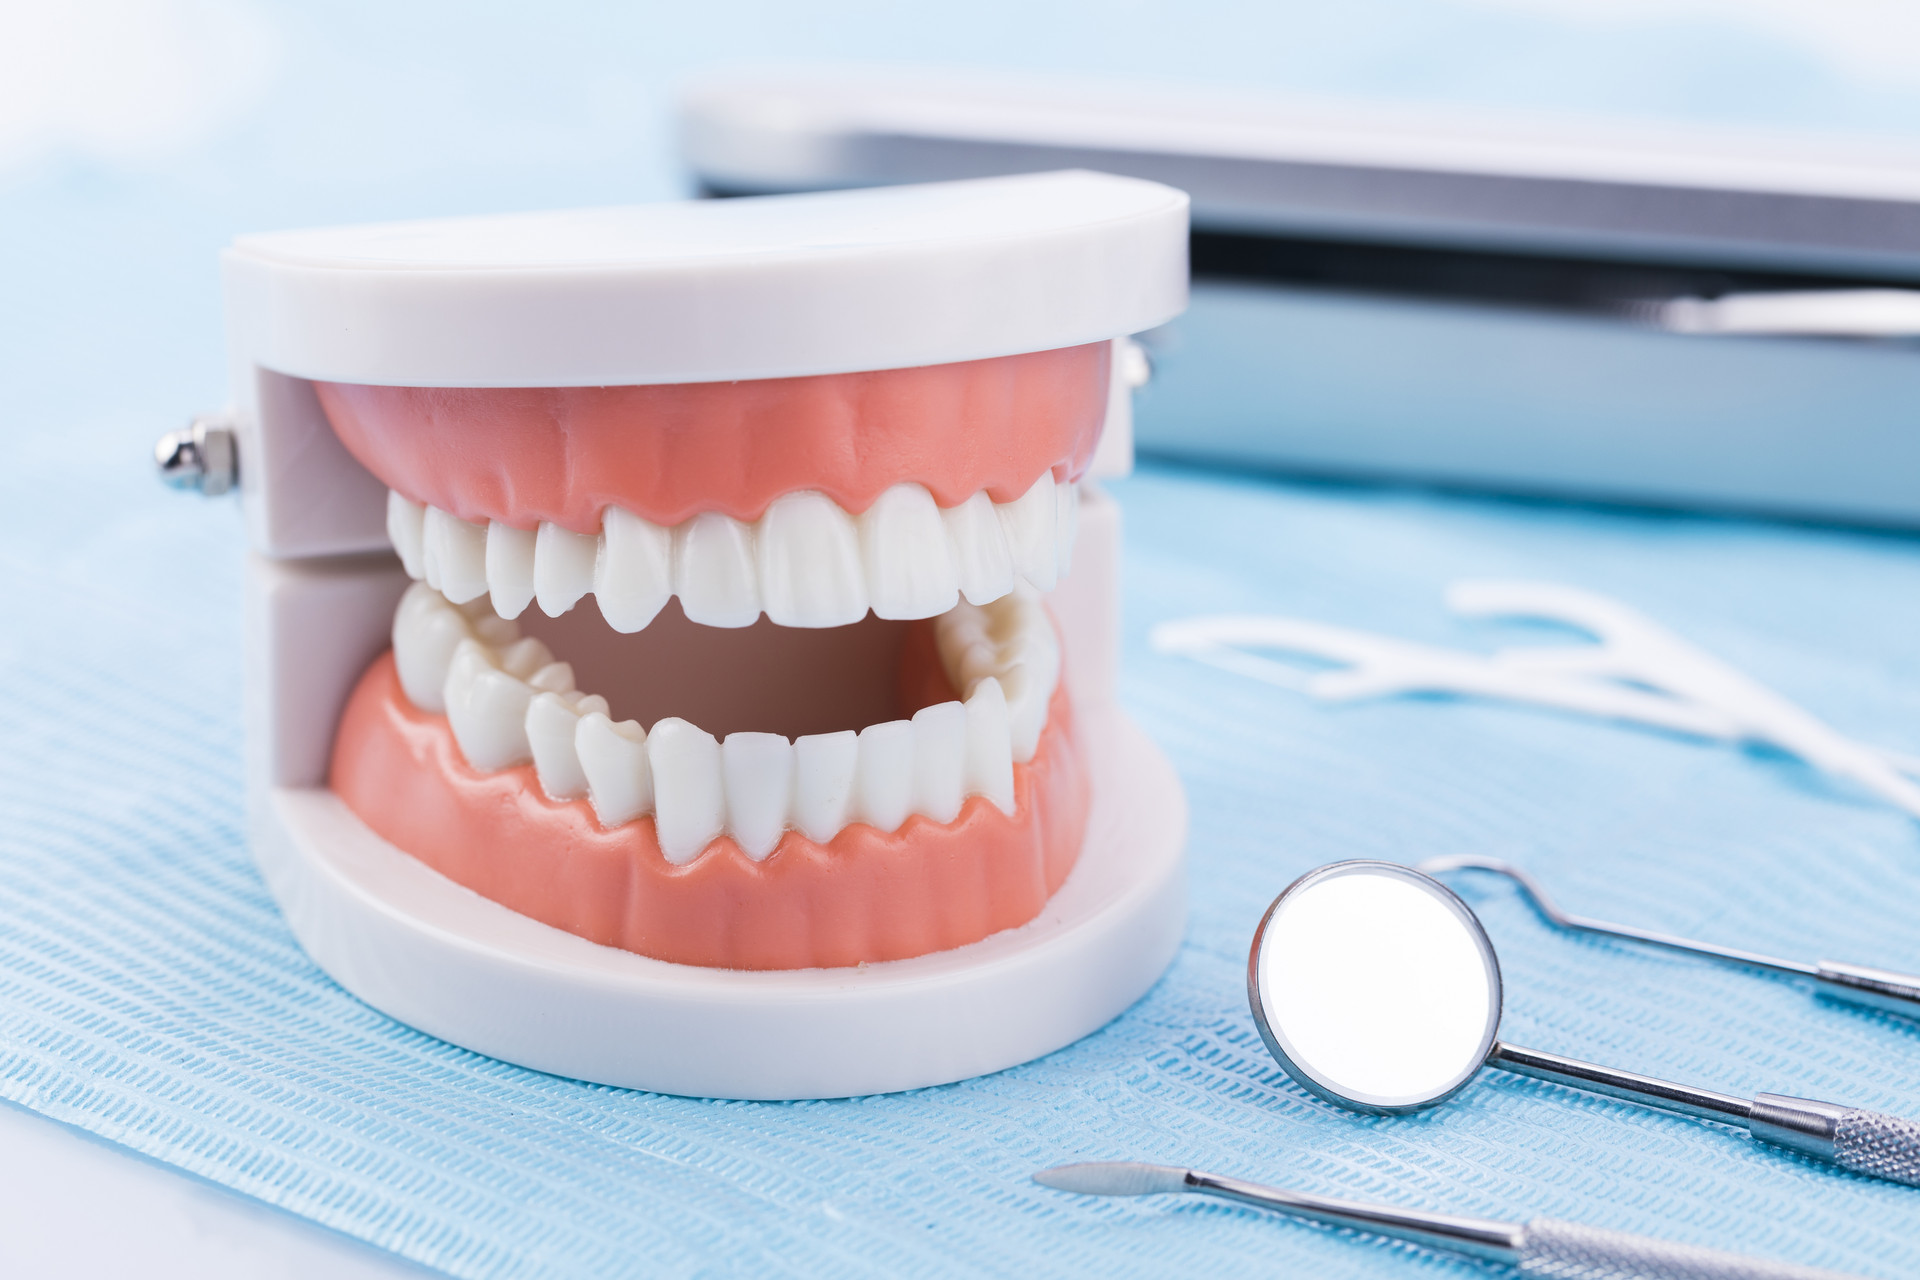 Clin Oral Investig：全身使用阿奇霉素作为III/IV期牙周炎患者洗牙和根管治疗的辅助治疗手段